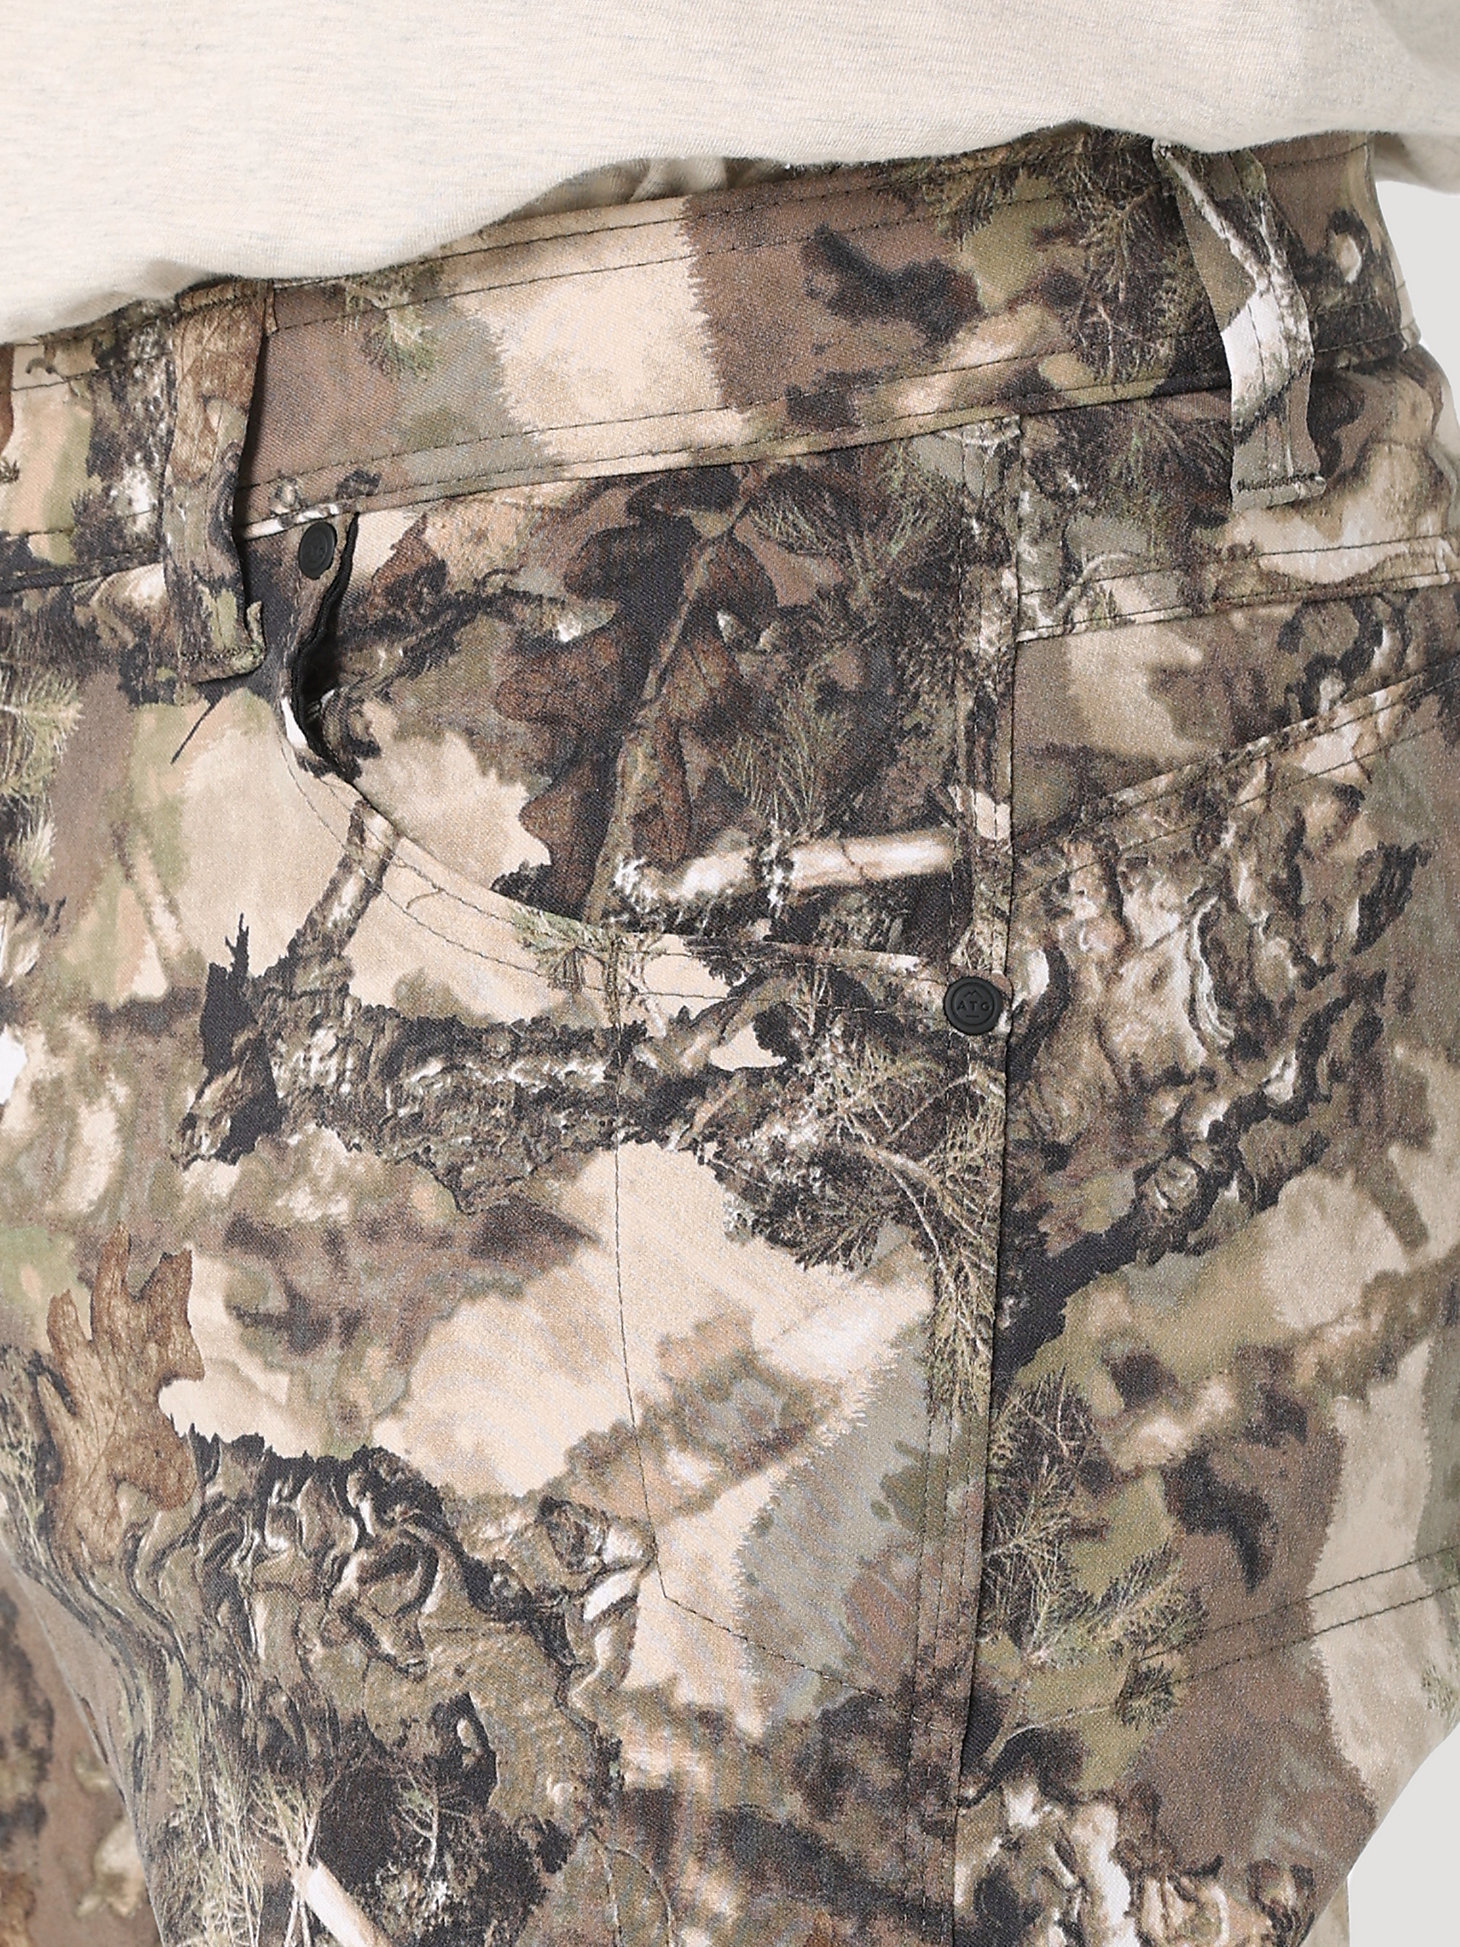 ATG Hunter™ Men's Fleece Lined Utility Pant in Warmwoods Camo alternative view 6